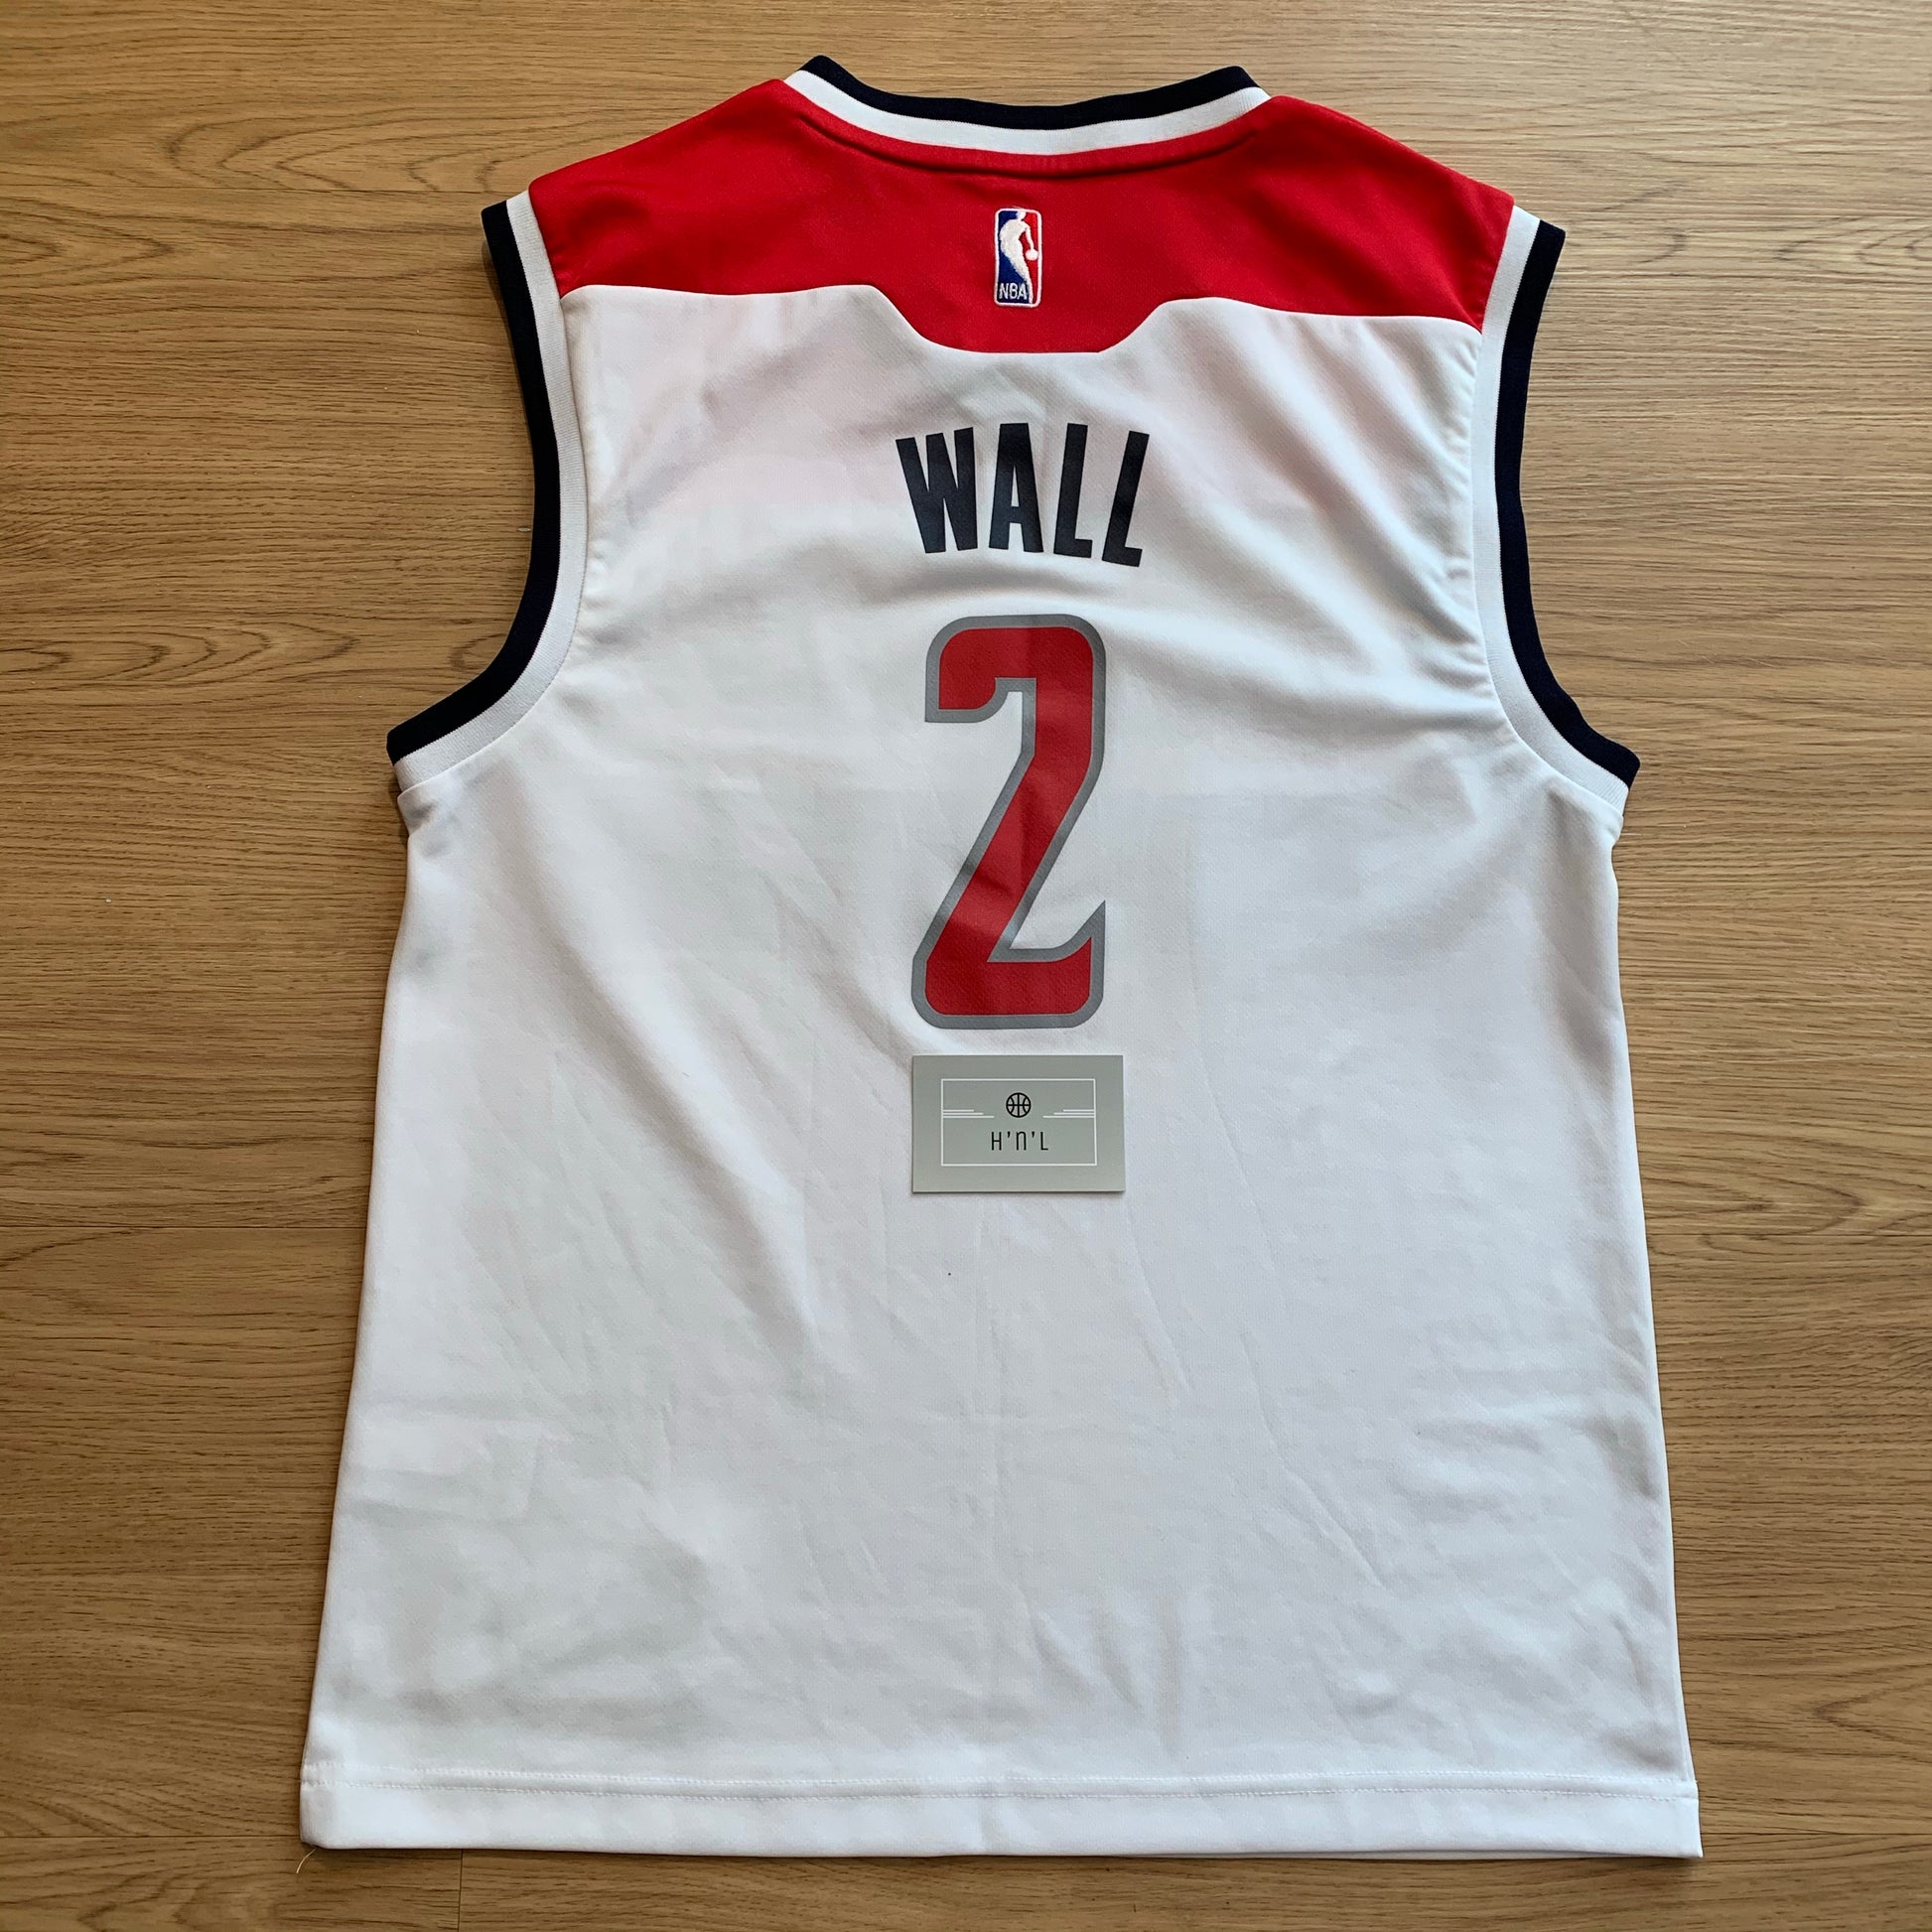 Washington Wizards NBA jersey. John Wall #2 on the - Depop